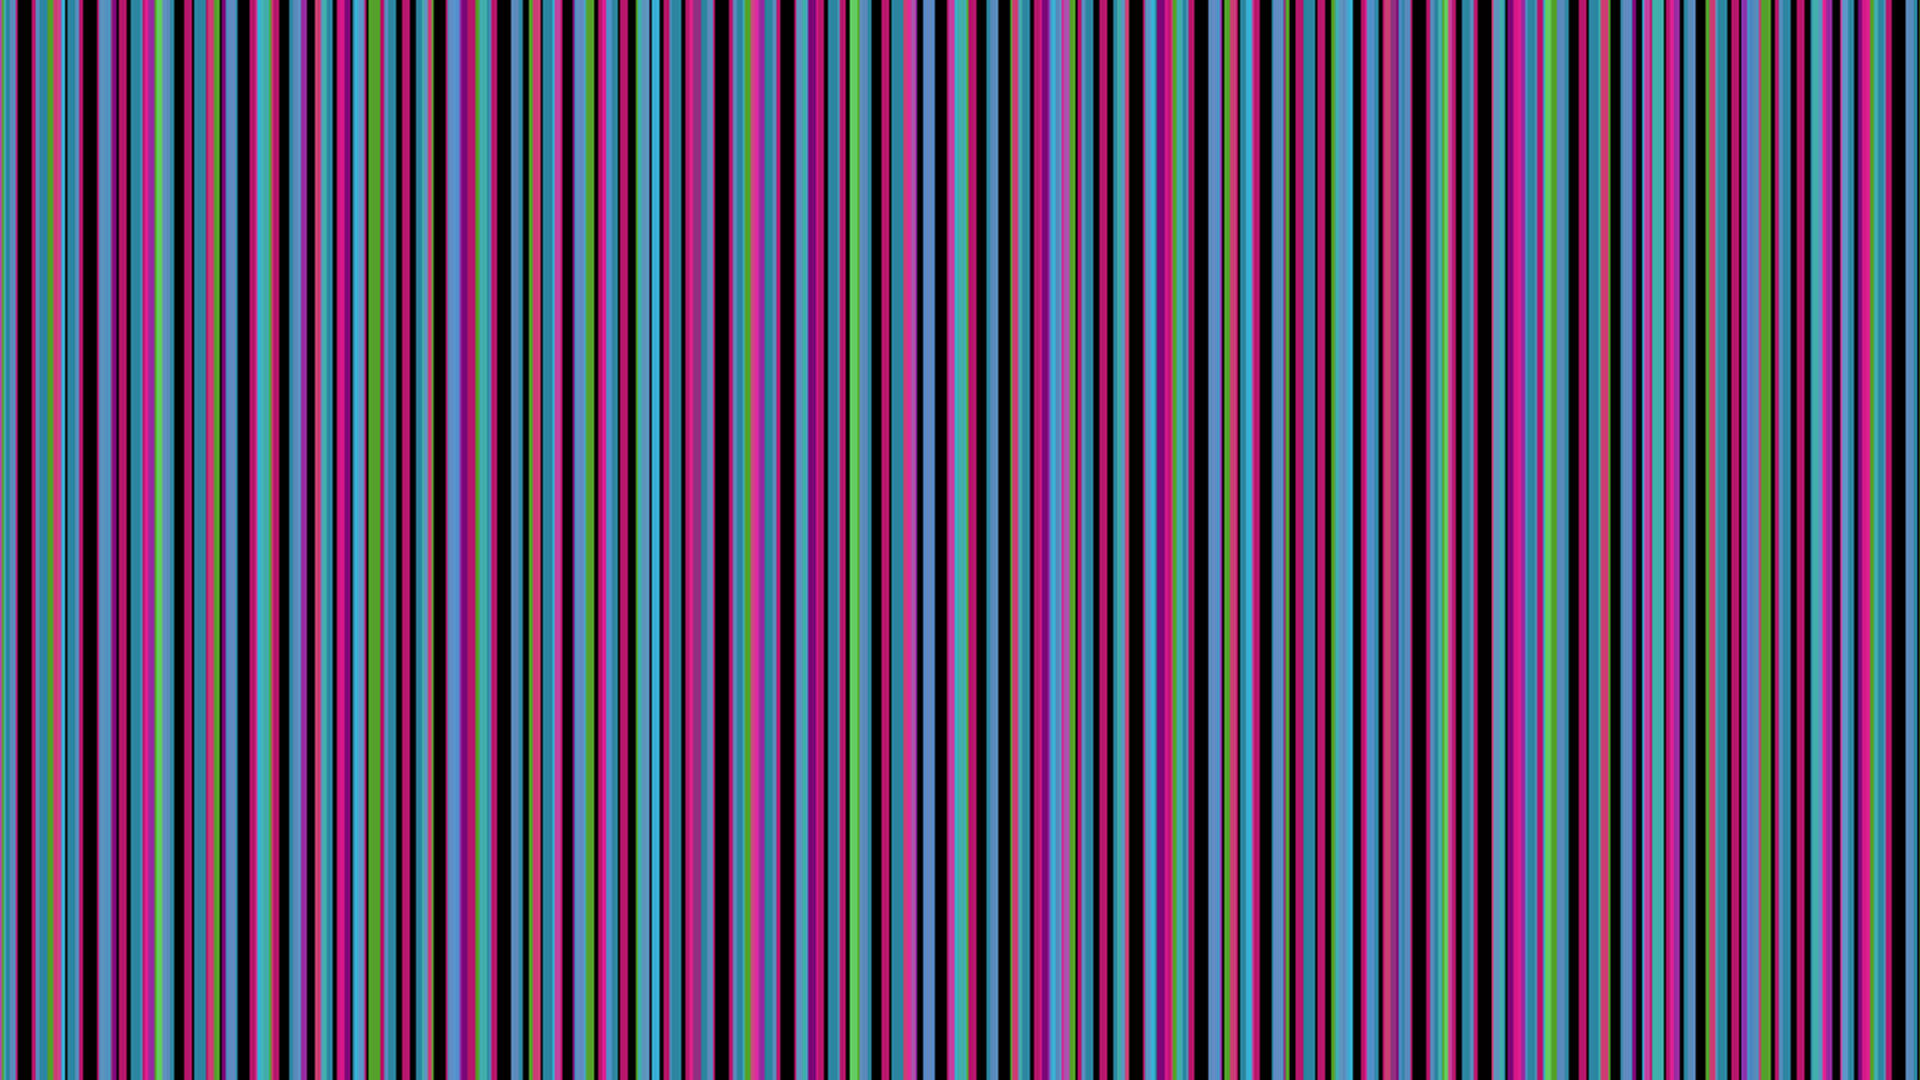 Barcode-like Rainbow Stripes Design Wallpaper